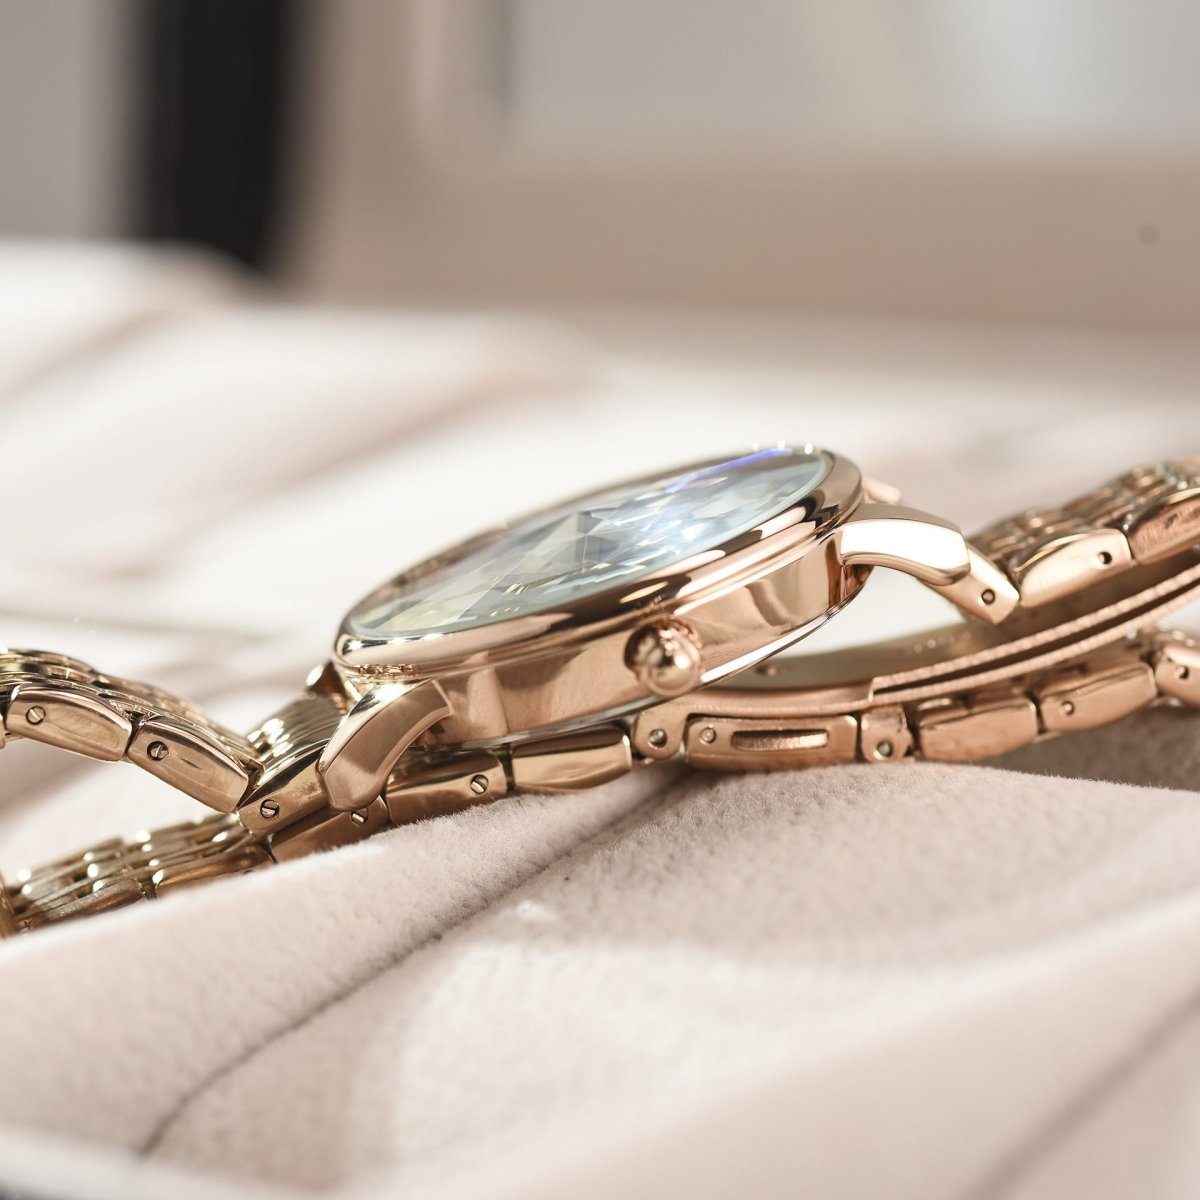 Women's Geneva Diamond Bracelet Watch | TrendyAffordables - TrendyAffordables - 0